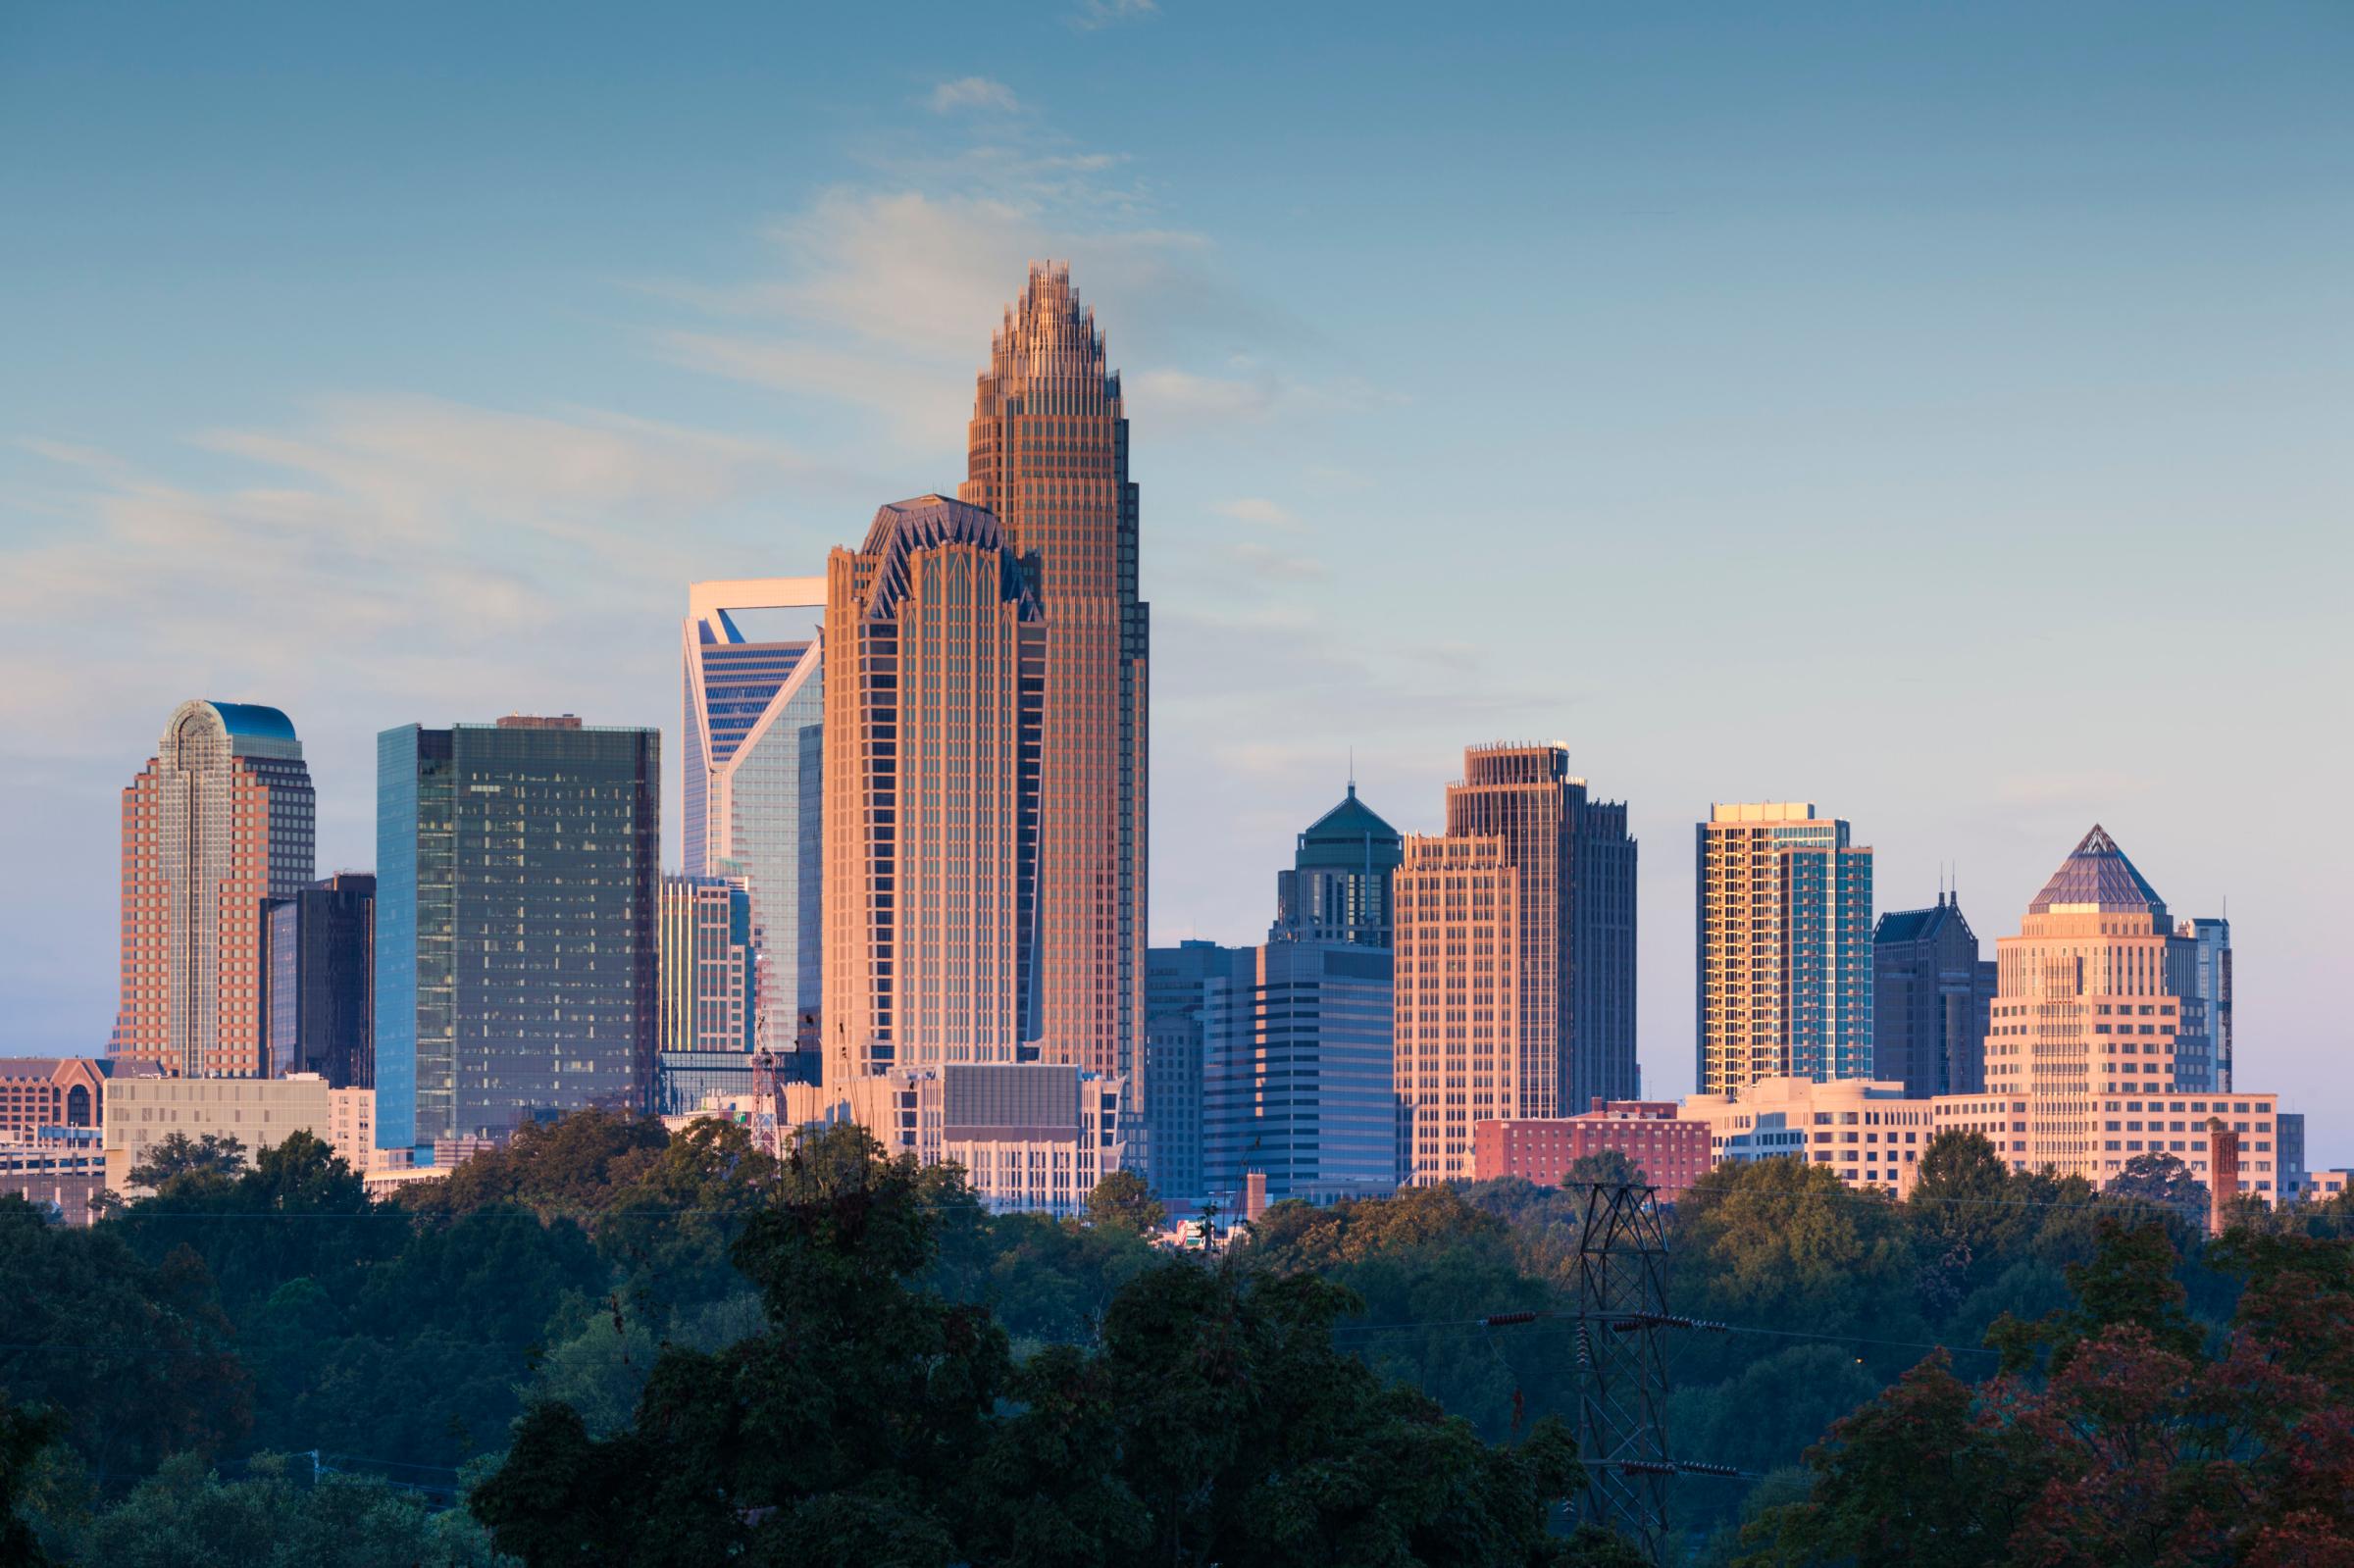 USA, North Carolina, Charlotte, View of city skyline